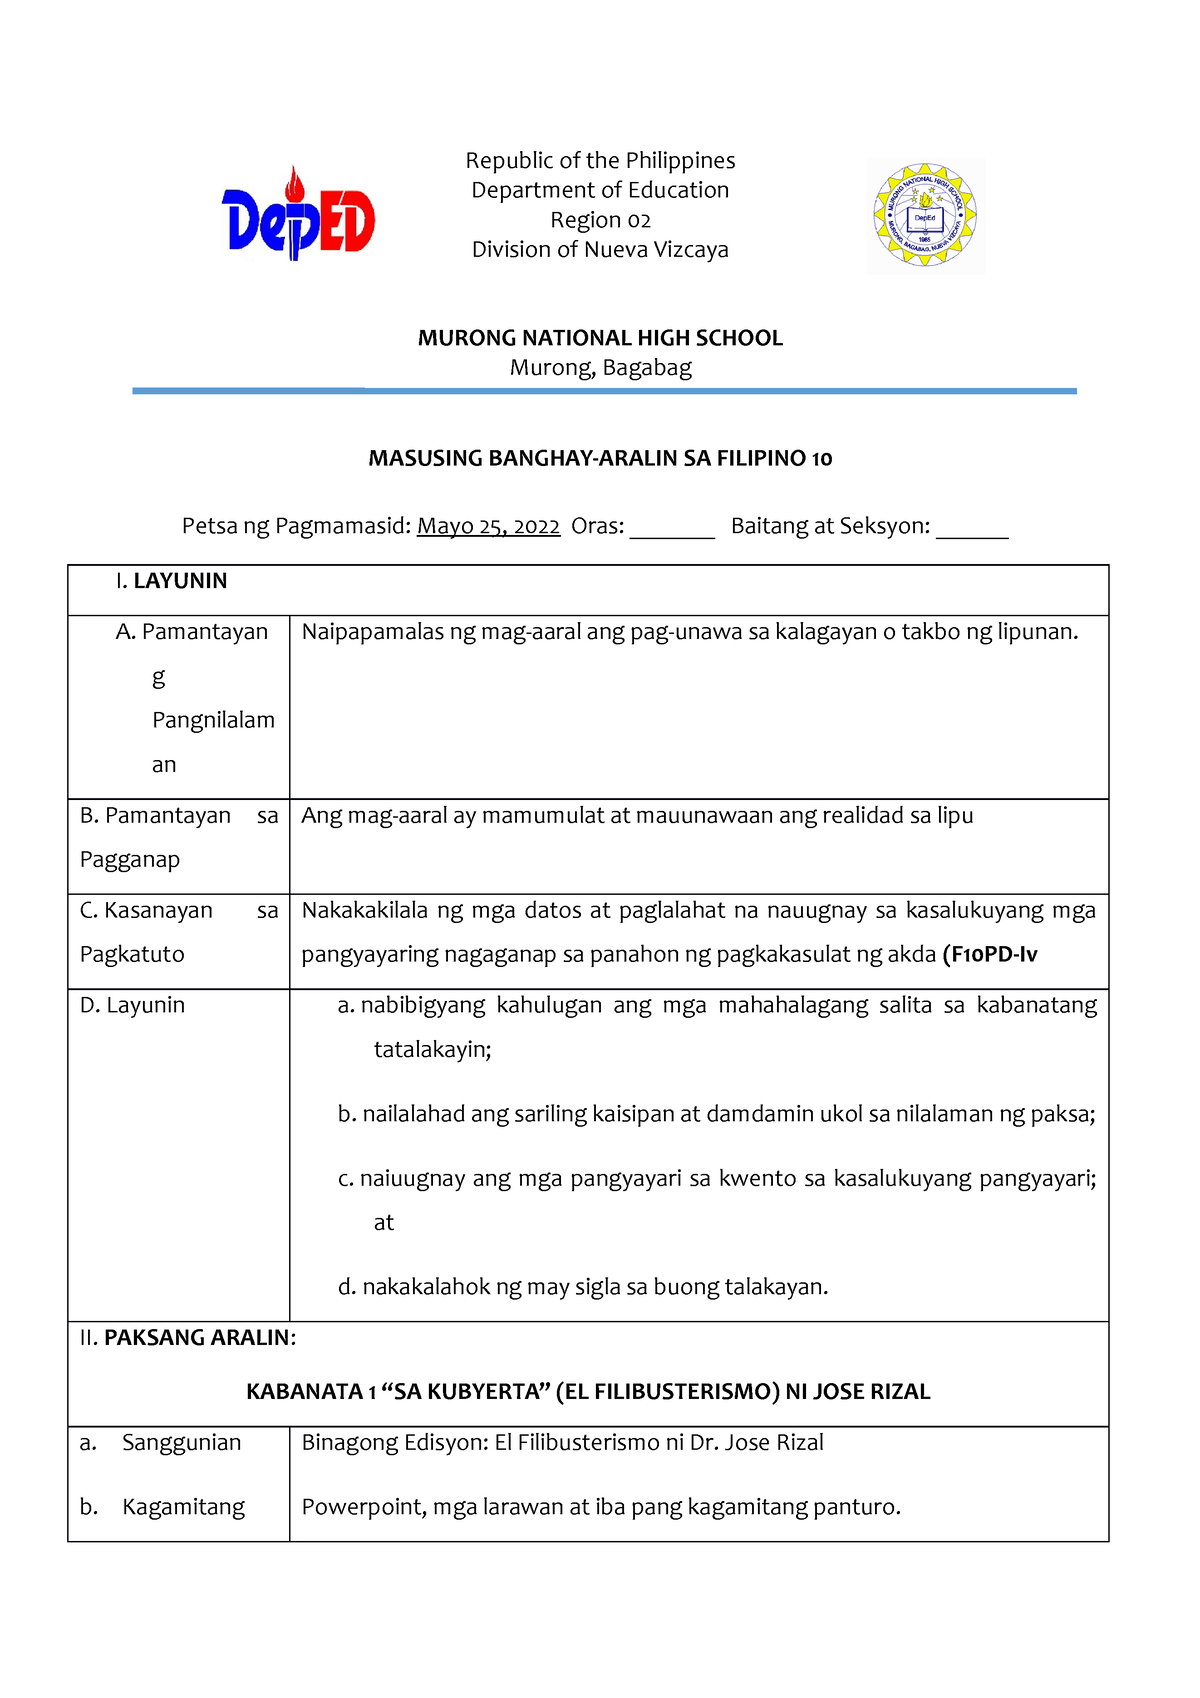 Sa Kubyerta Kabanata El Filibusterismo Republic Of The Philippines Department Of Education